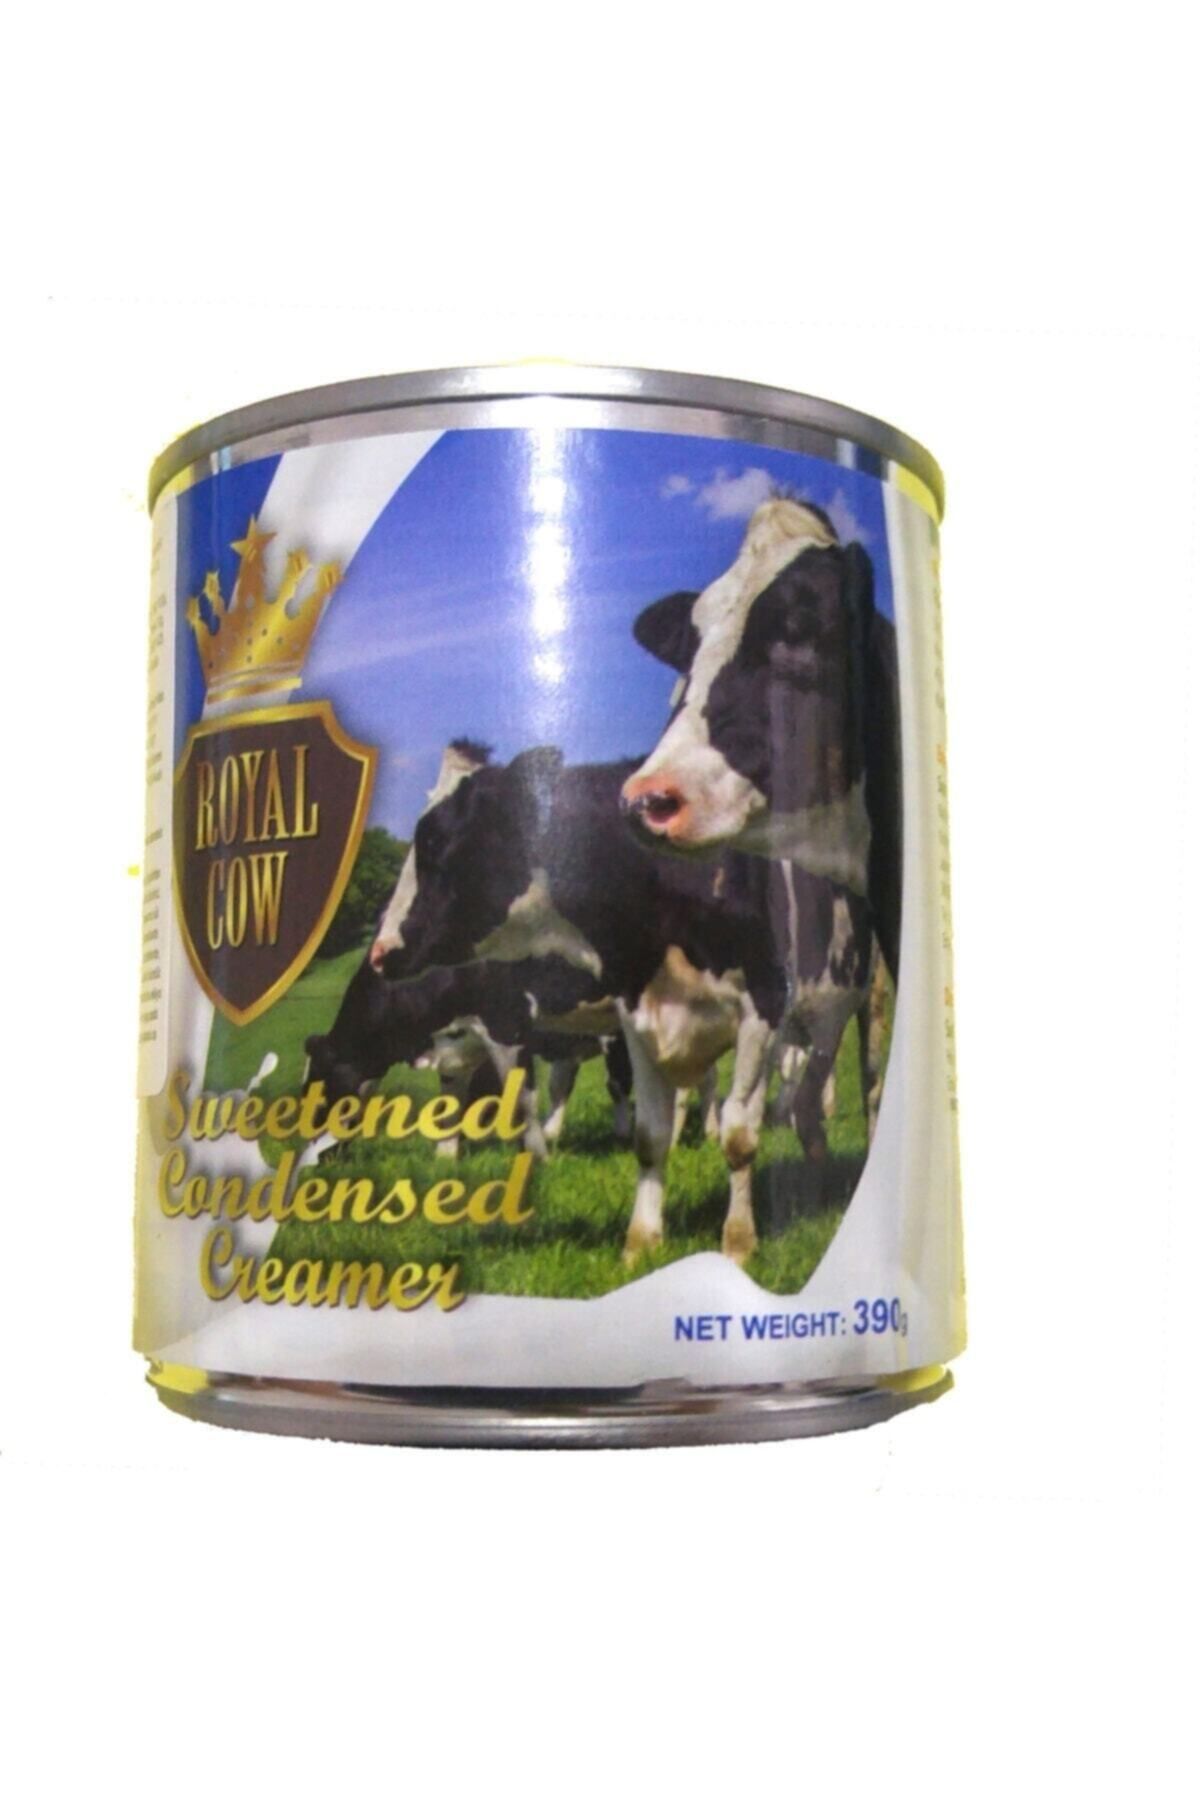 Royal Cow Şekerli Bitkisel Yağlı Konsantre Krema ( Sweetened Condensed Skimmed Milk) - 390g